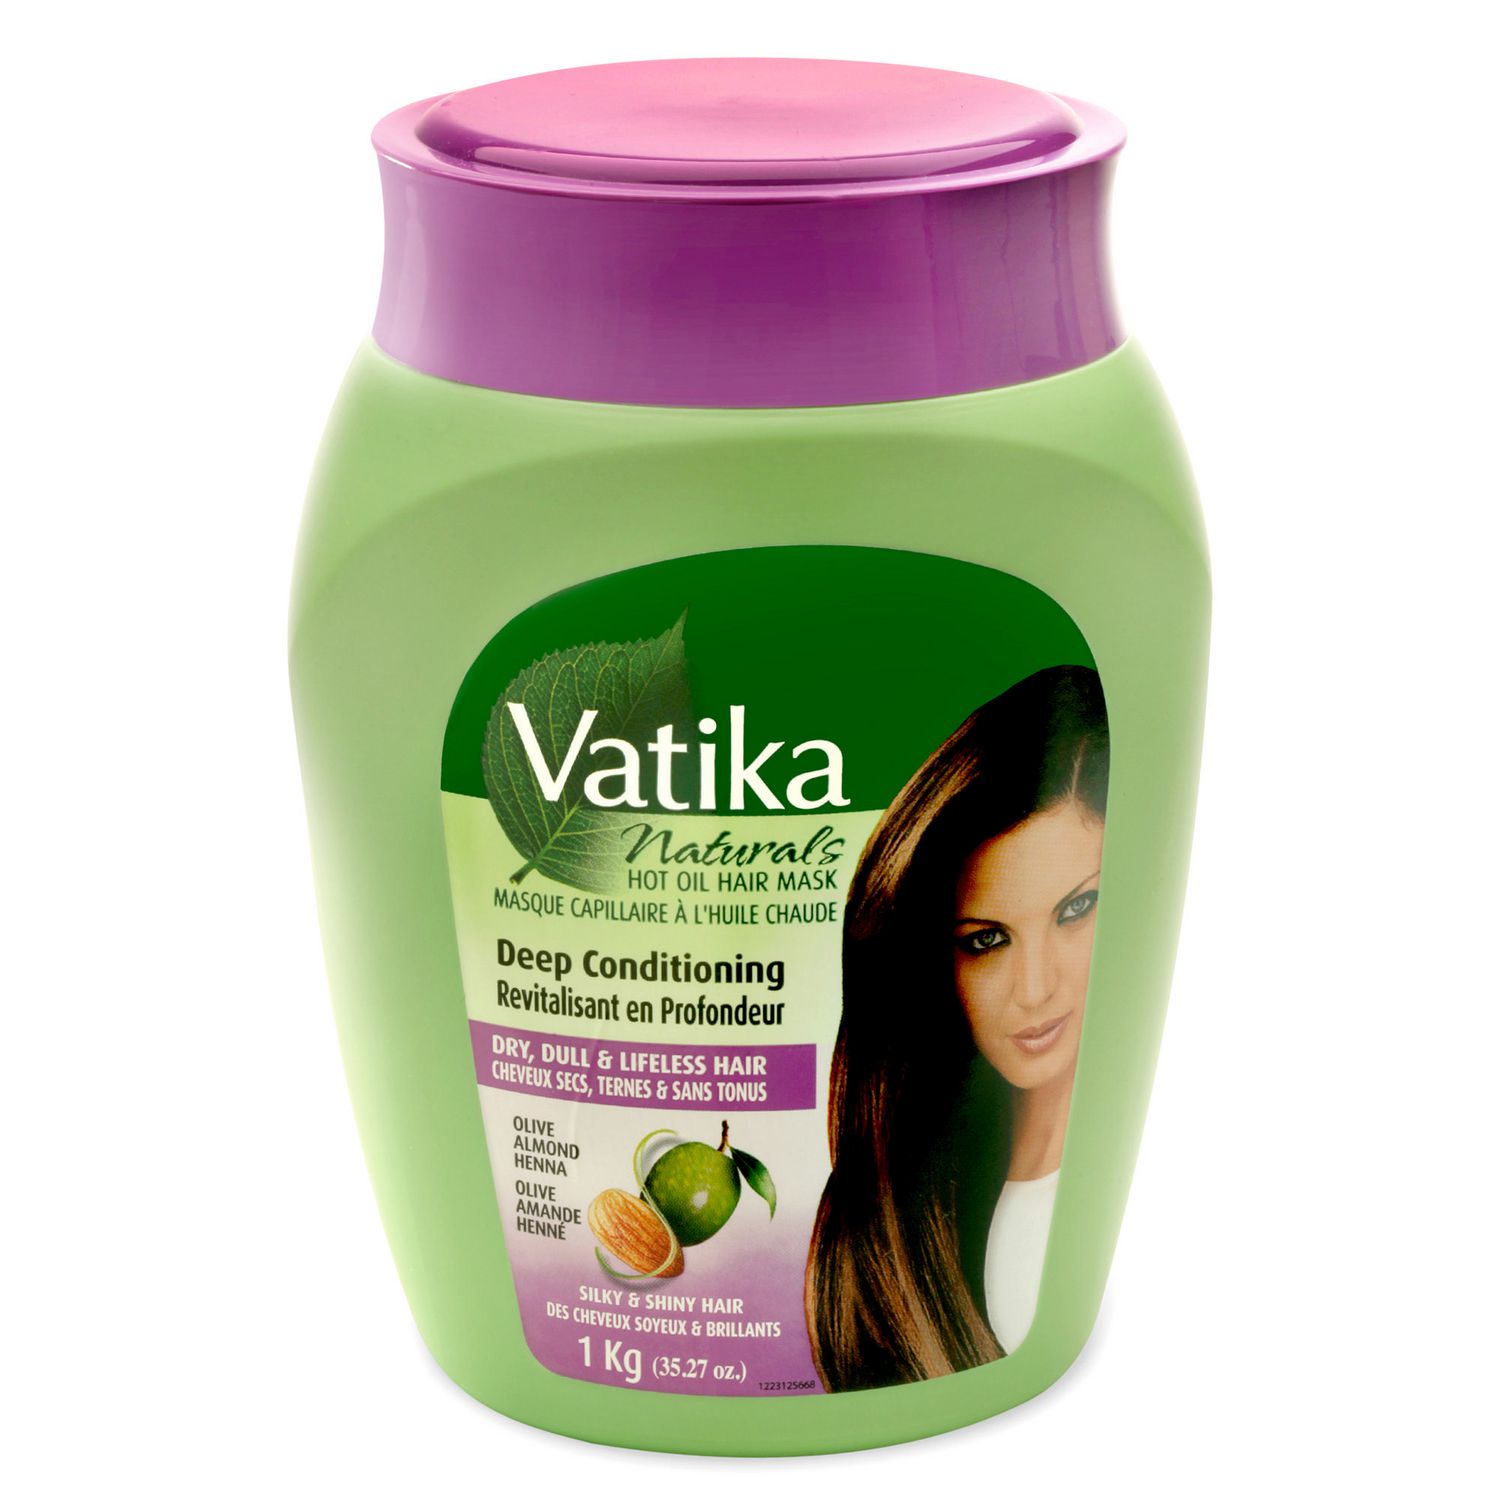 Dabur Vatika Naturals Deep Conditioning Hot oil Hair Mask | Walmart Canada